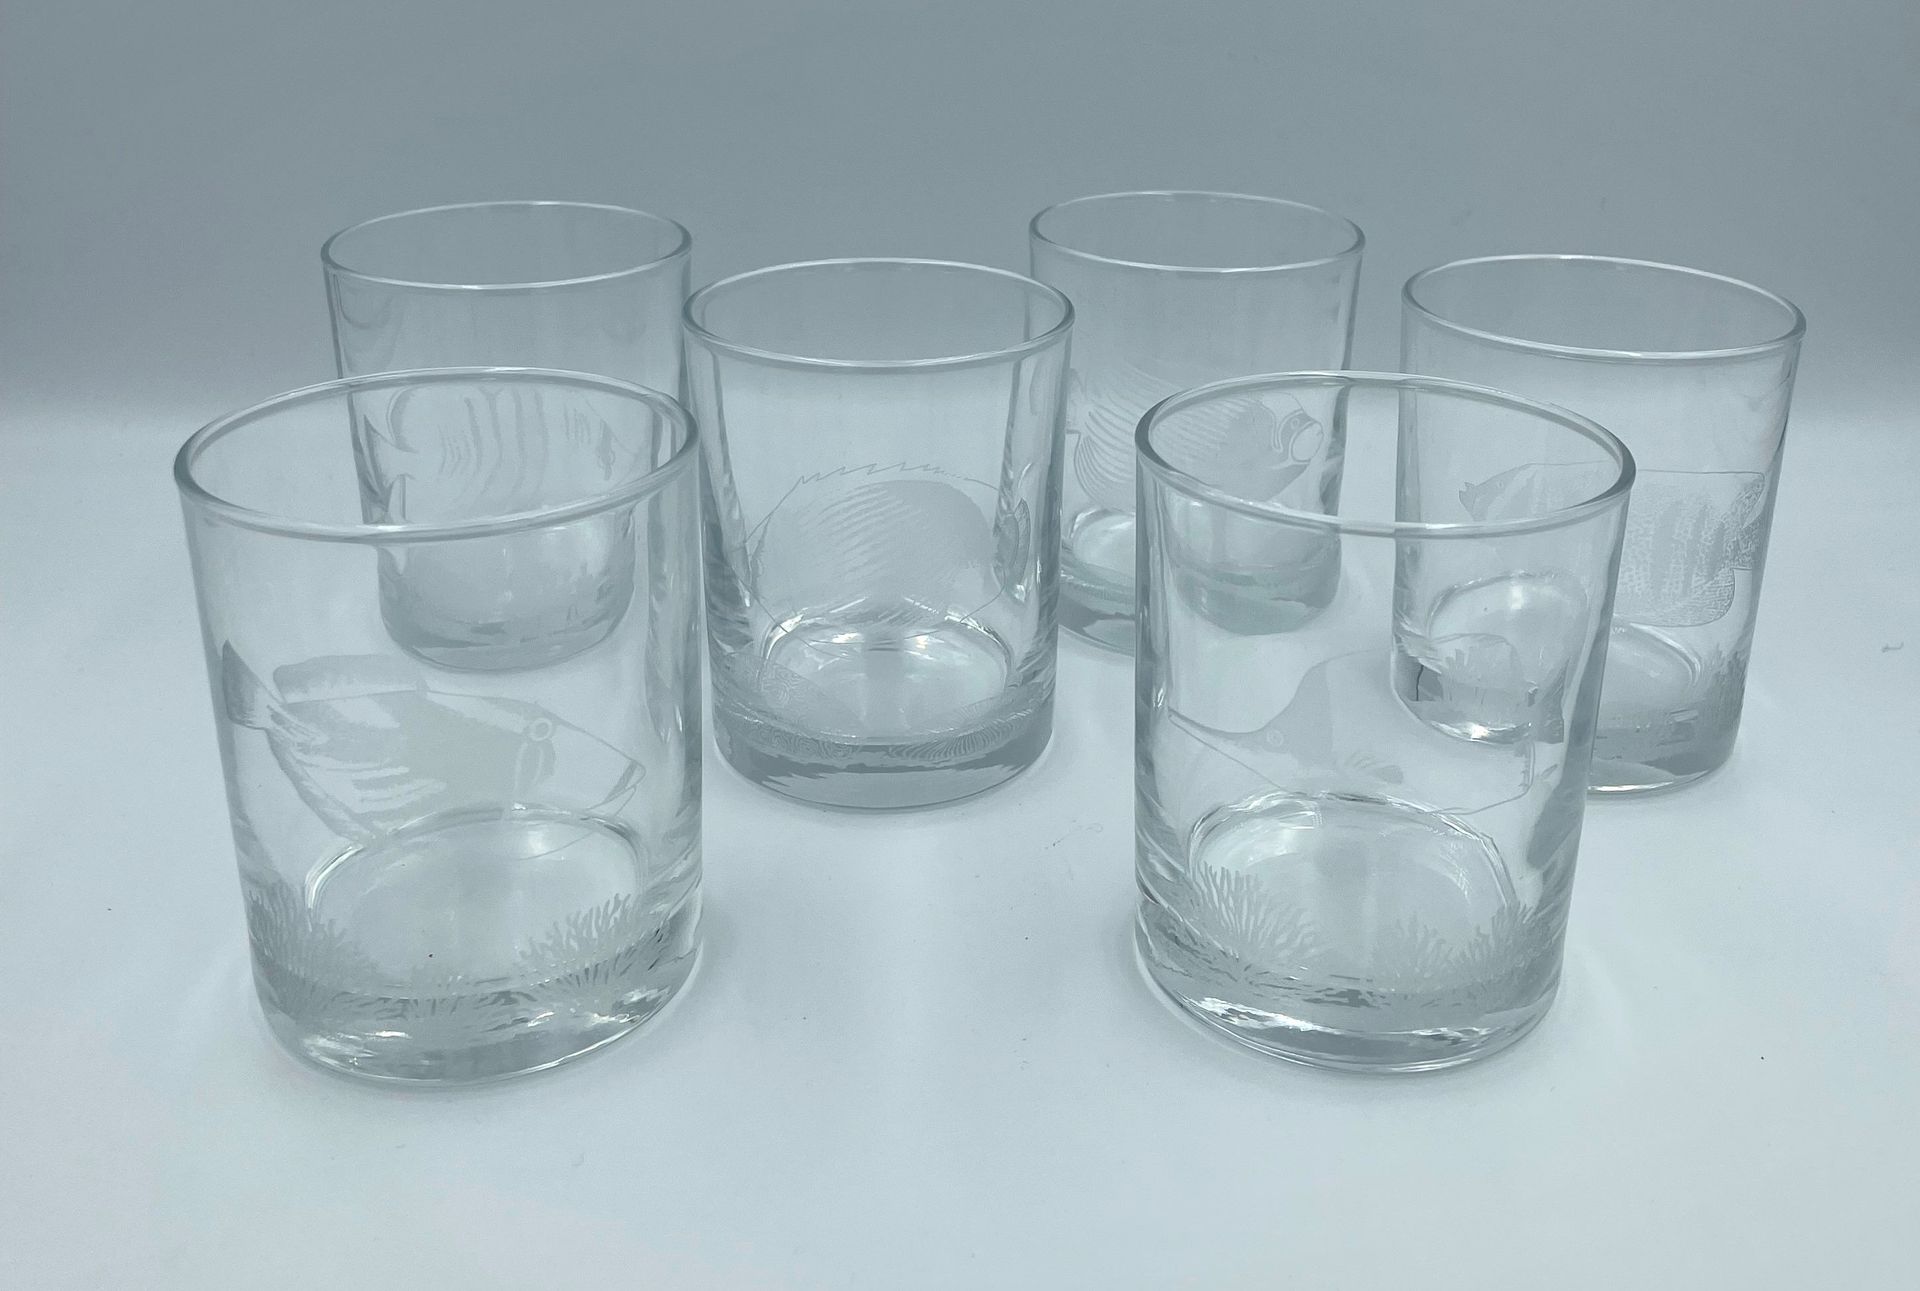 Null Juego de seis vasos de agua de cristal con peces tropicales grabados.